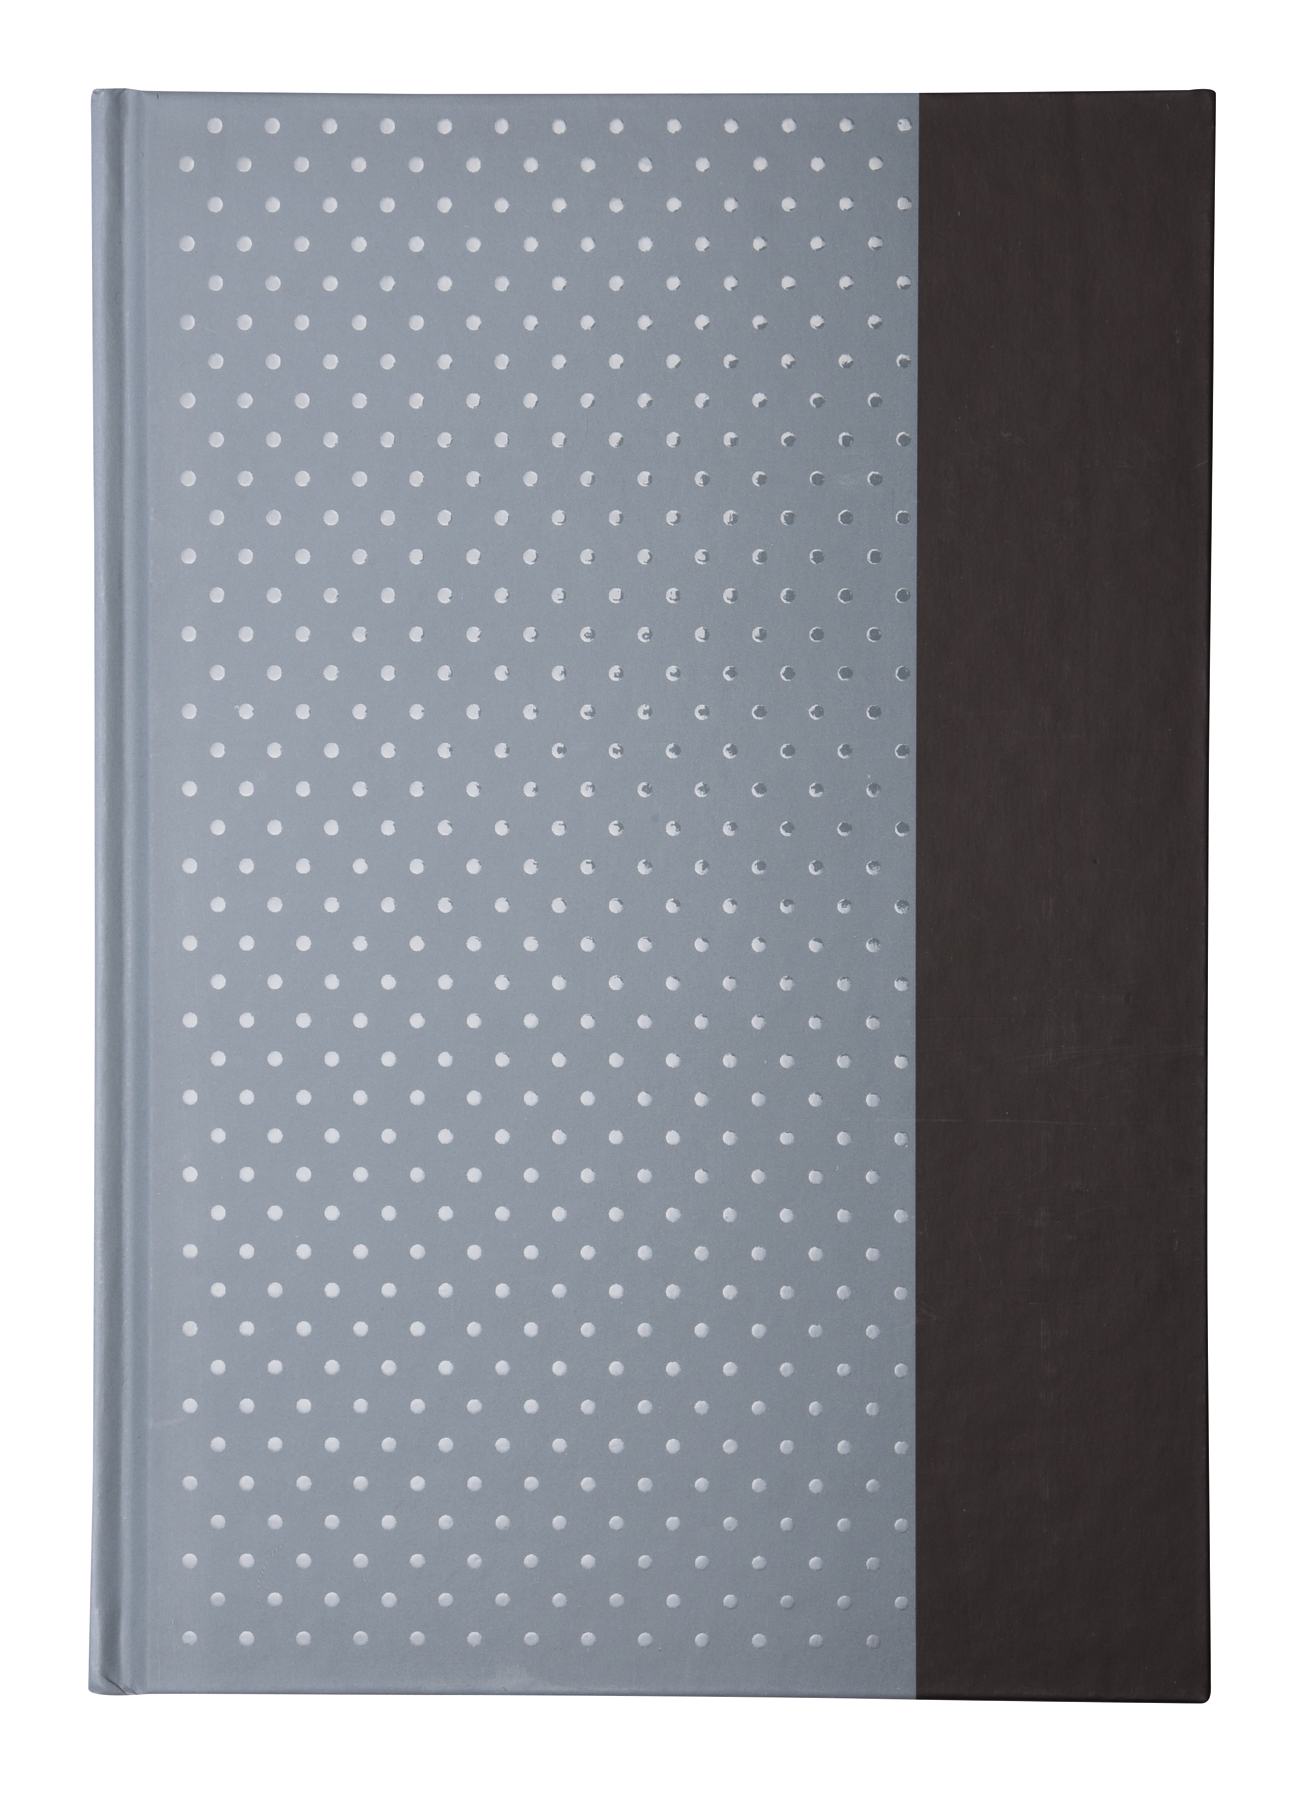 Notebook SIGNUM in DIN A5 format - grey